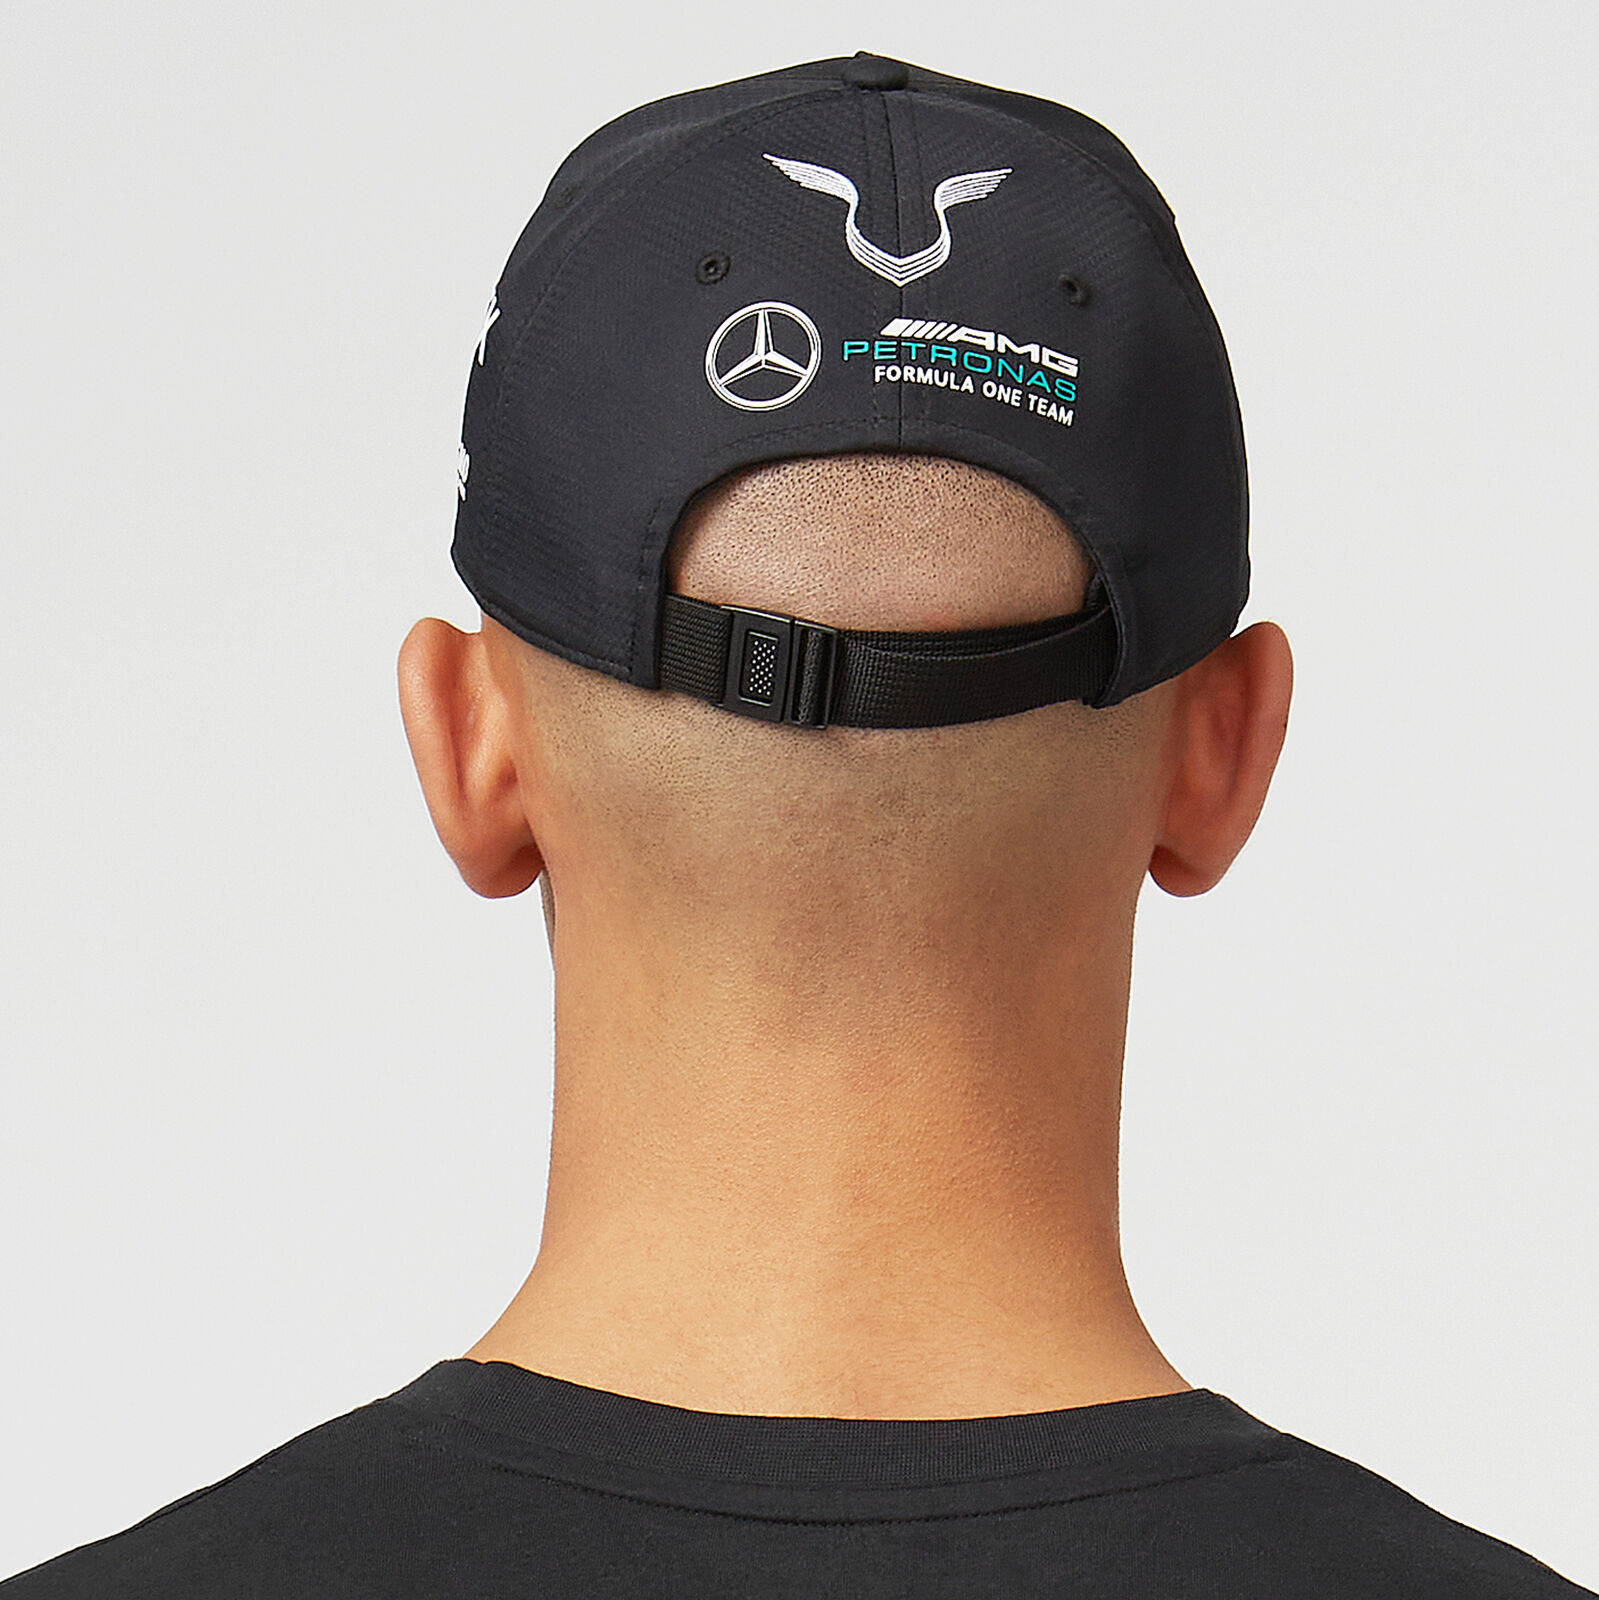 Casquette d'équipe 2022 - Mercedes-AMG Petronas